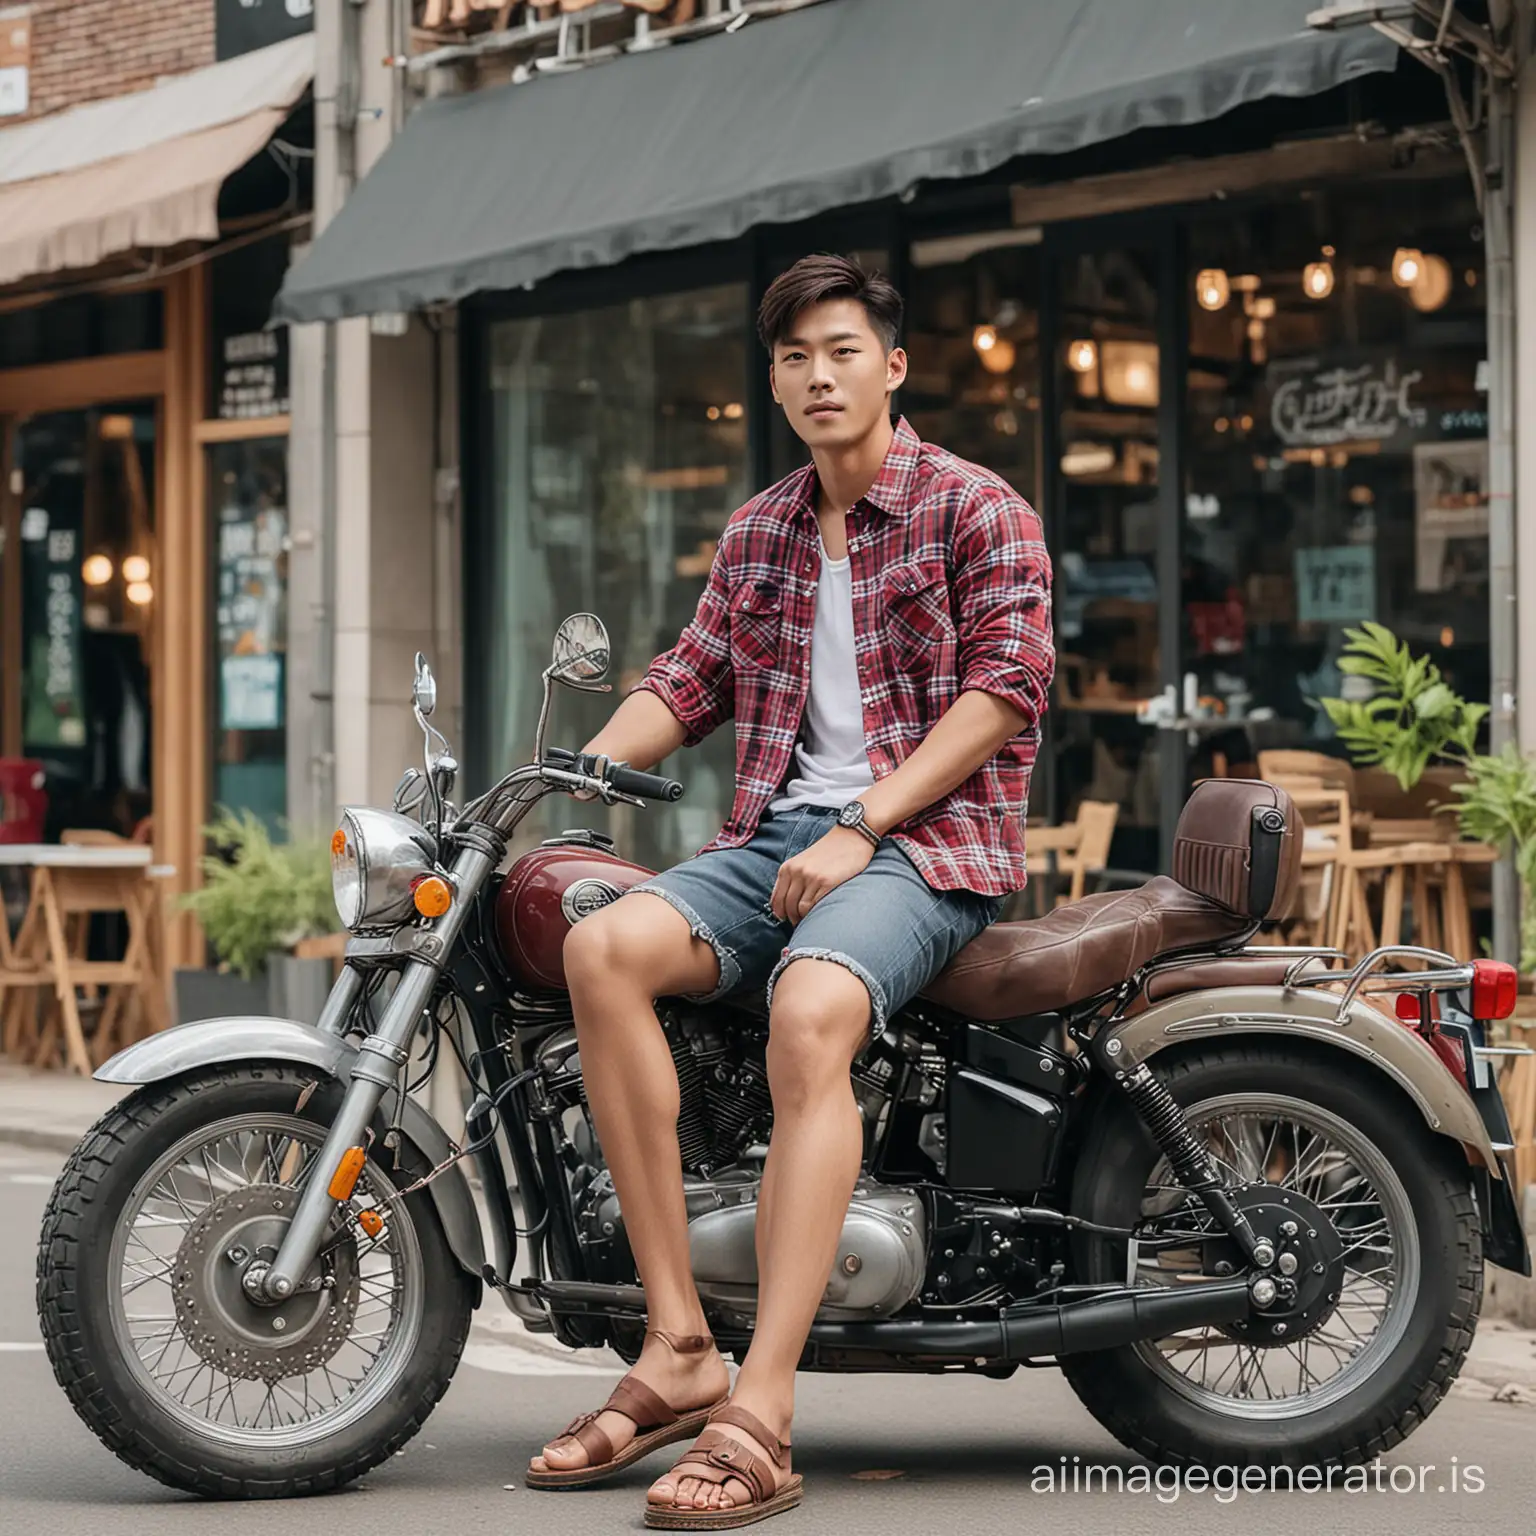 seorang laki-laki tampan Asia korea memakai kemeja fanel di padukan dengan celana pendek dan sandal duduk diatas motor besar,background depan kafe